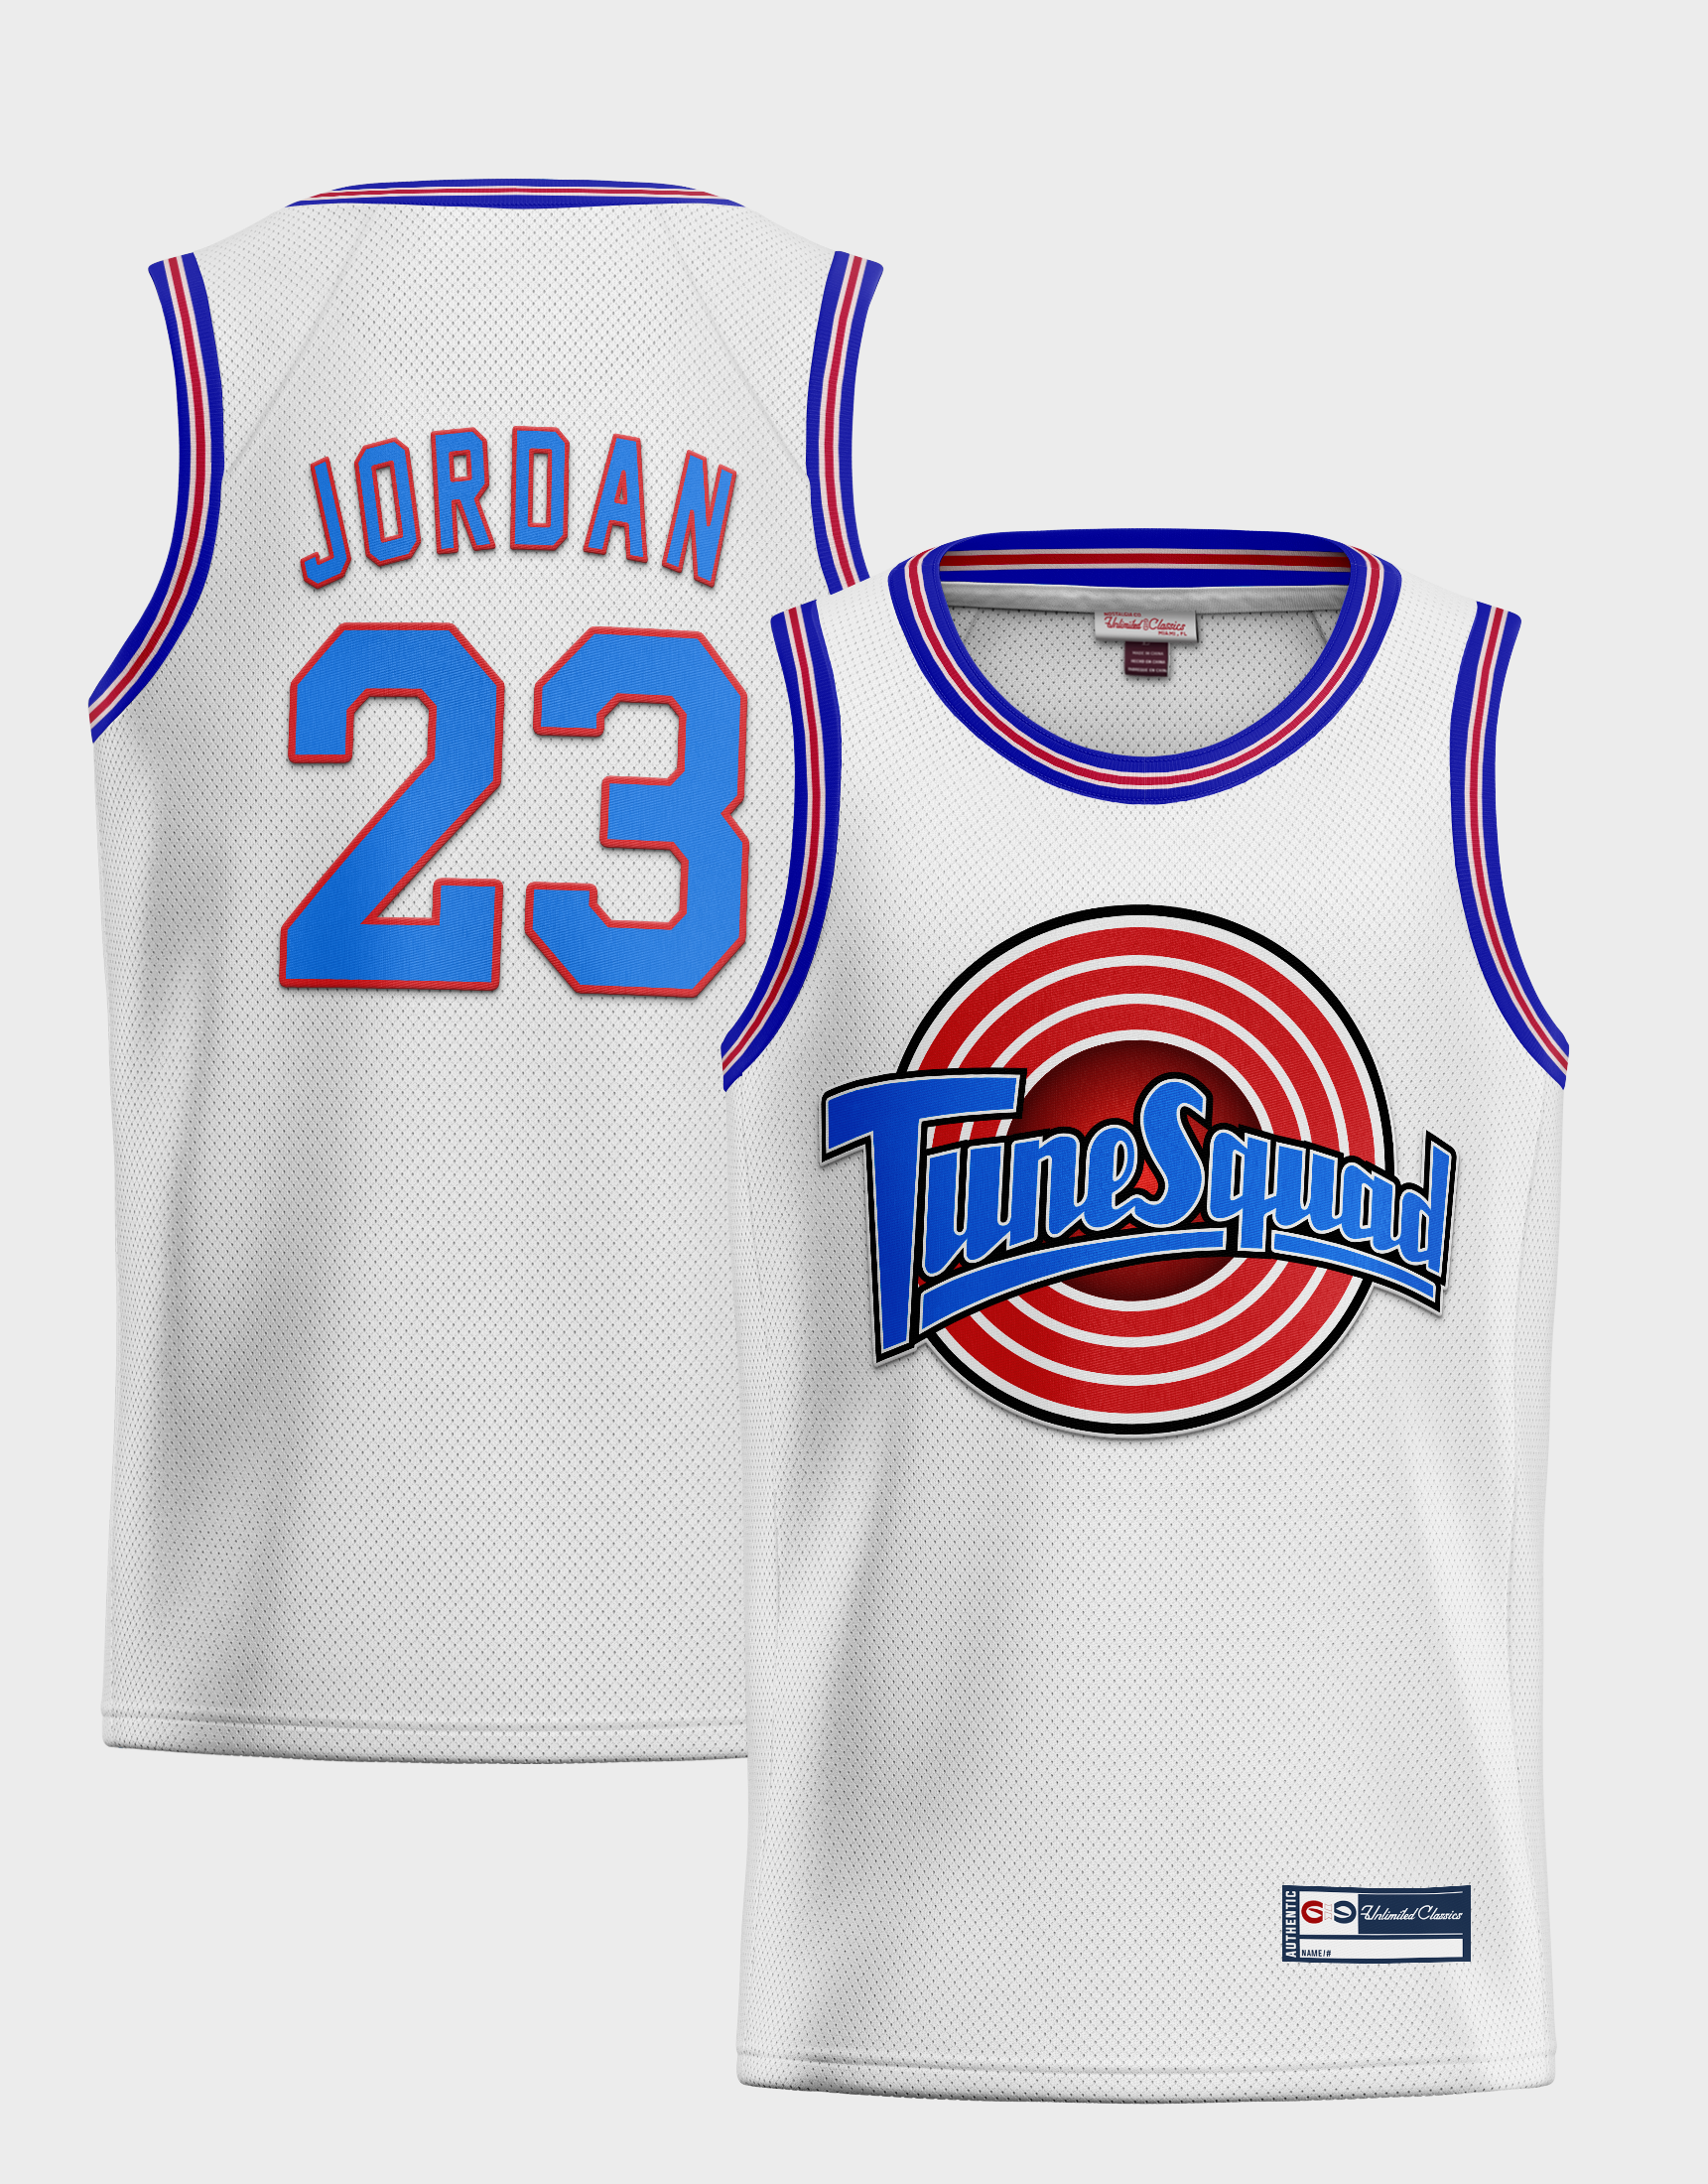 Tune Squad Jersey 'Space Jam' Michael Jordan Basketball Jersey *IN-STOCK*